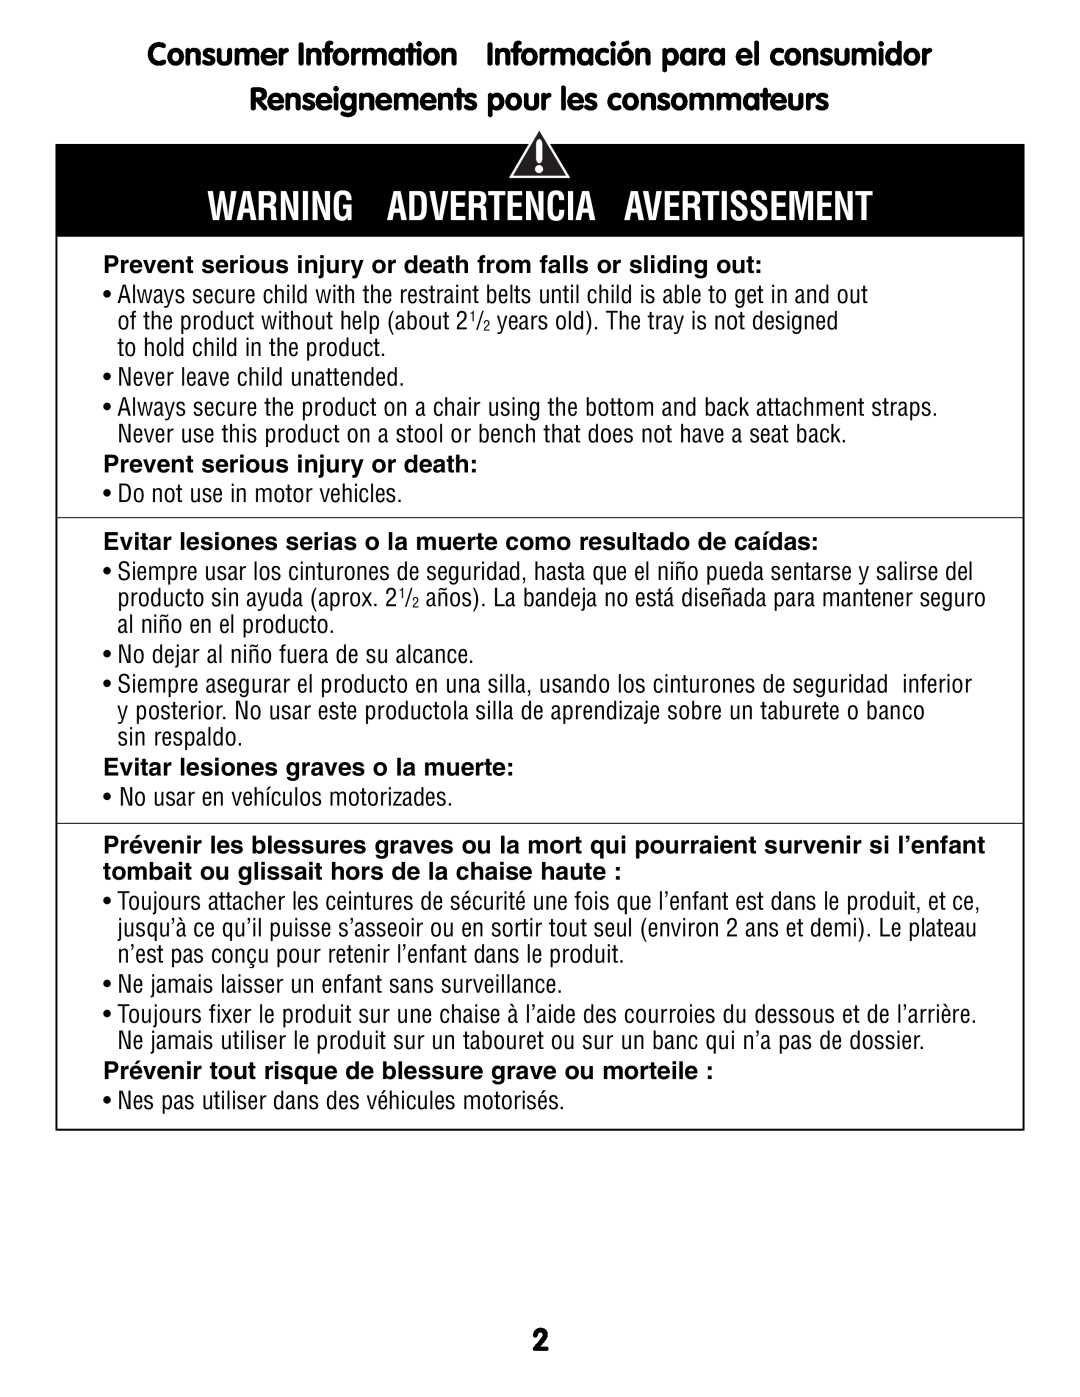 Fisher-Price P0278 instruction sheet Warning Advertencia Avertissement, Consumer Information Información para el consumidor 